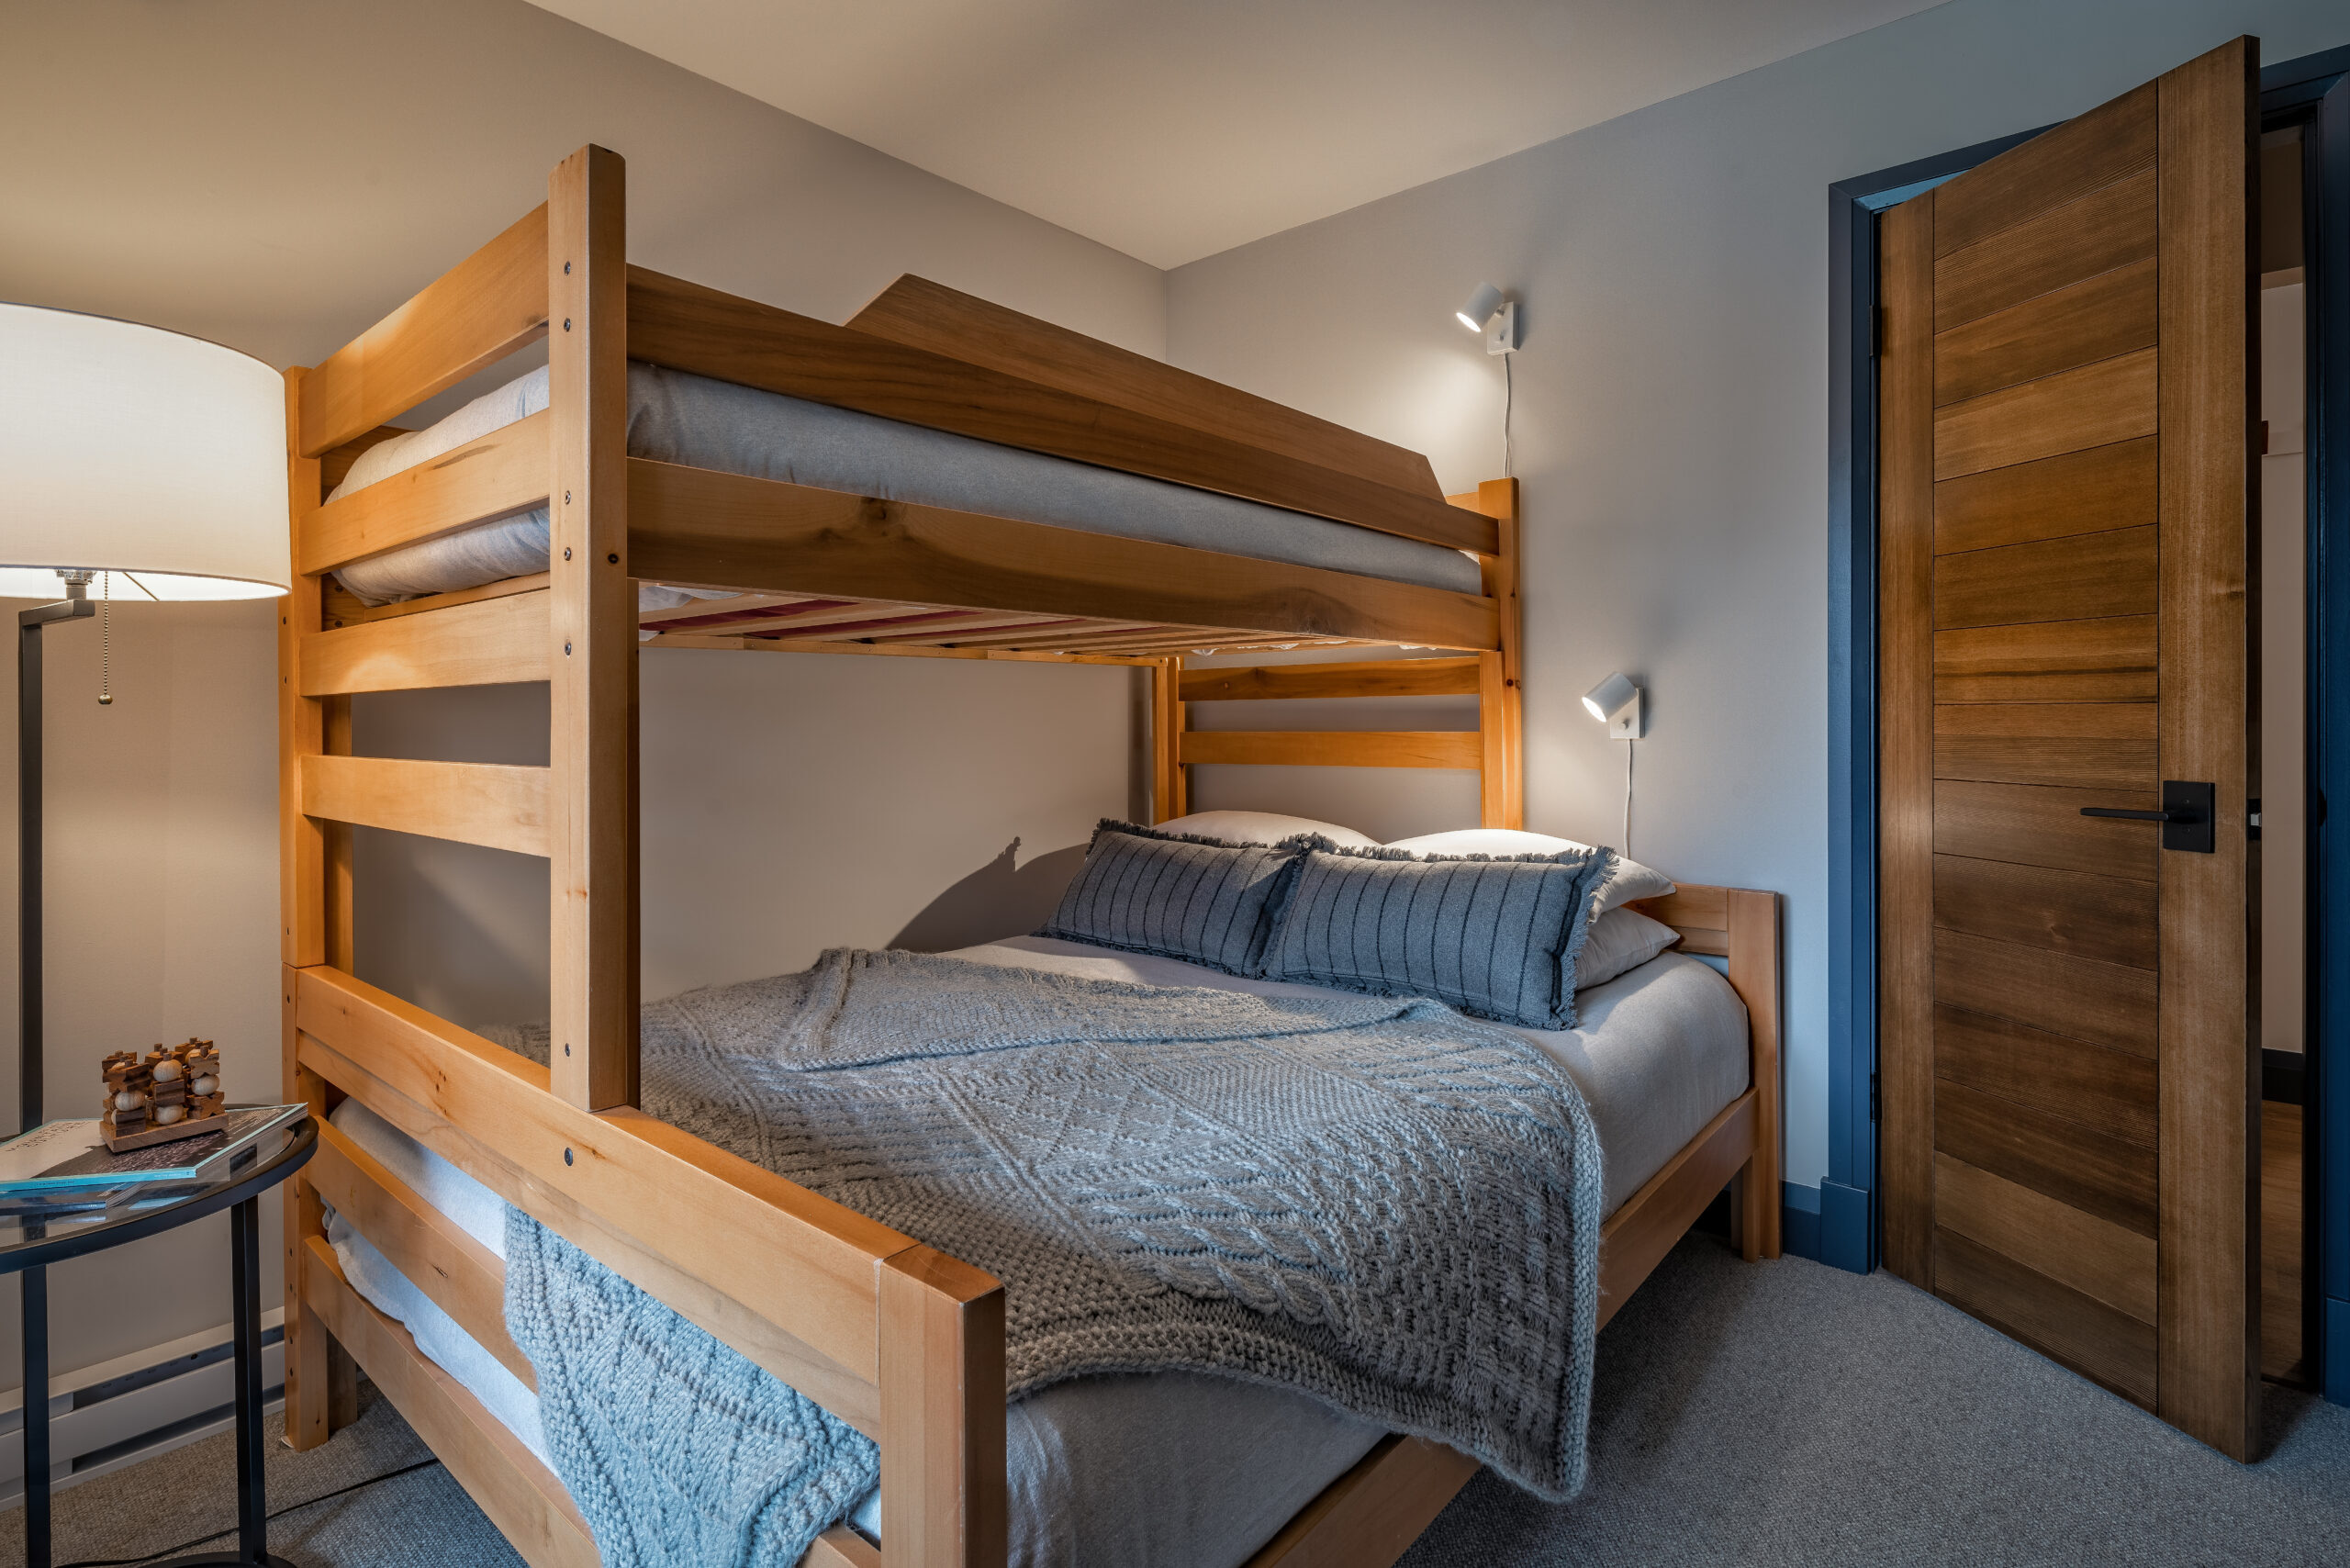 Guest bedroom with bunk bed